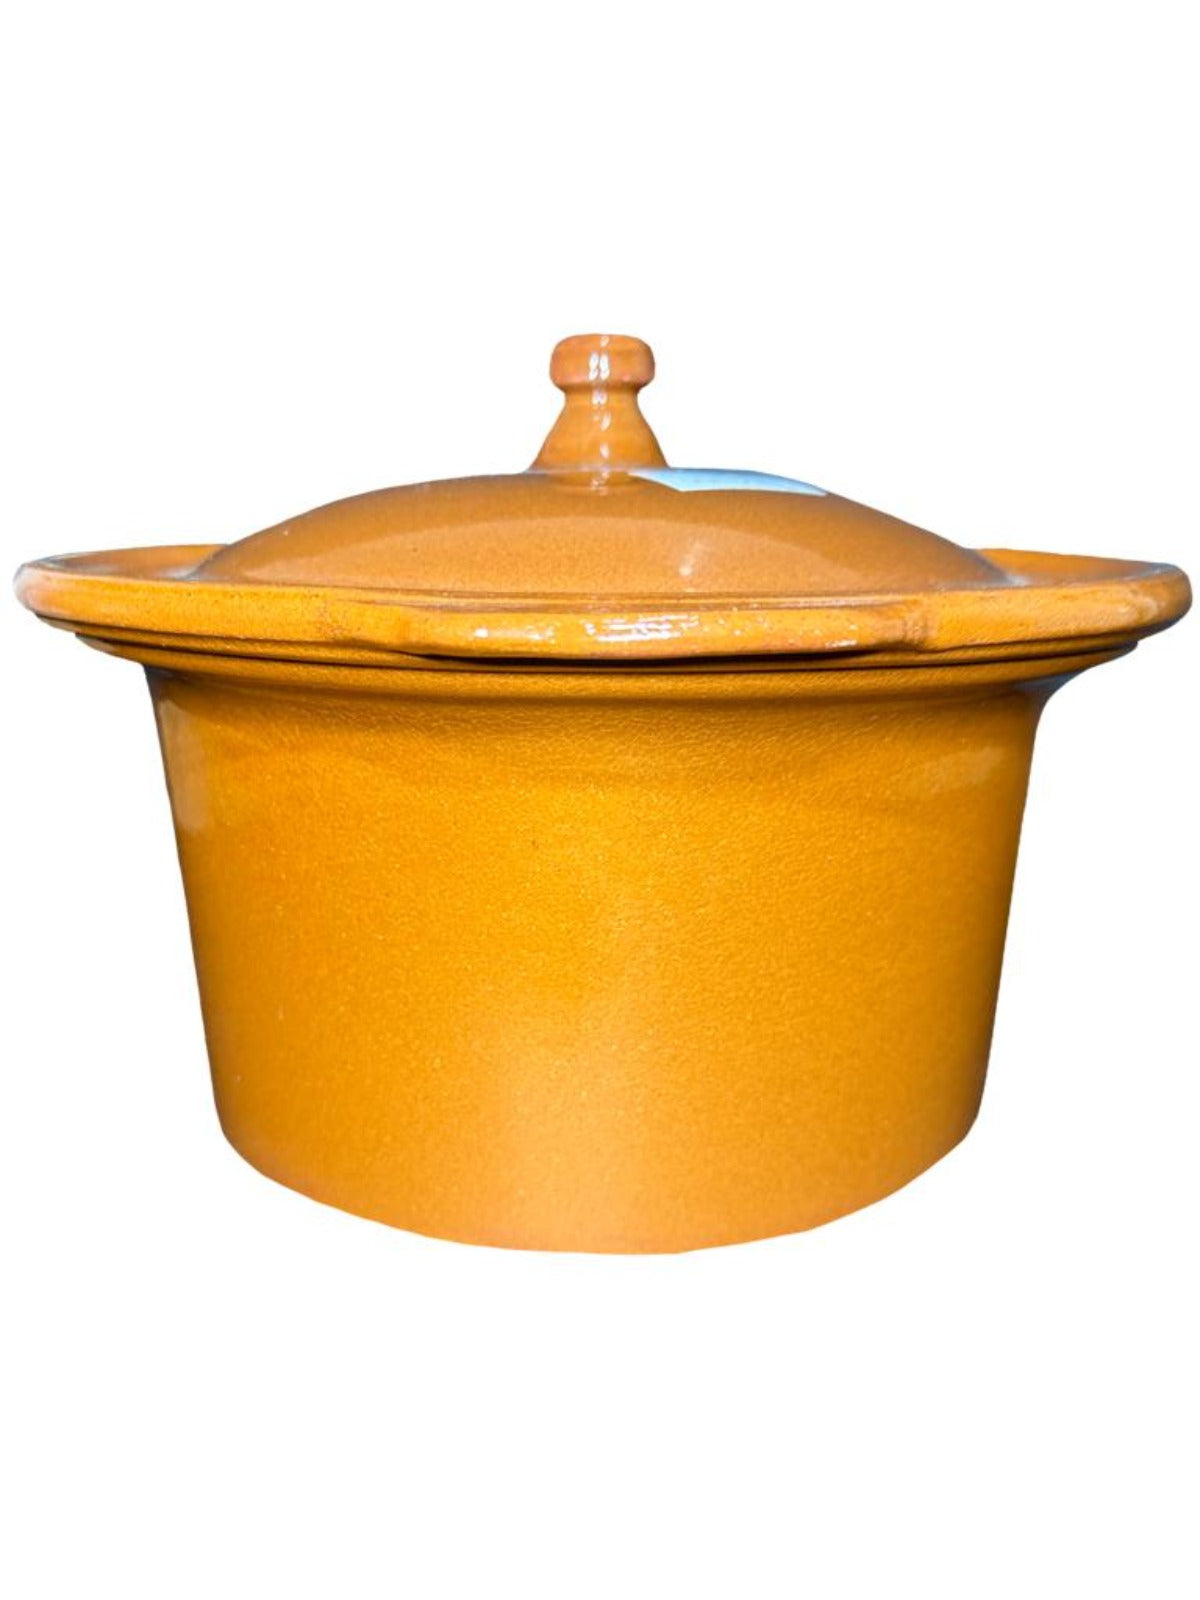 HP Padilla Olla Spanish Terracotta Cooking Pot 27cm 4L